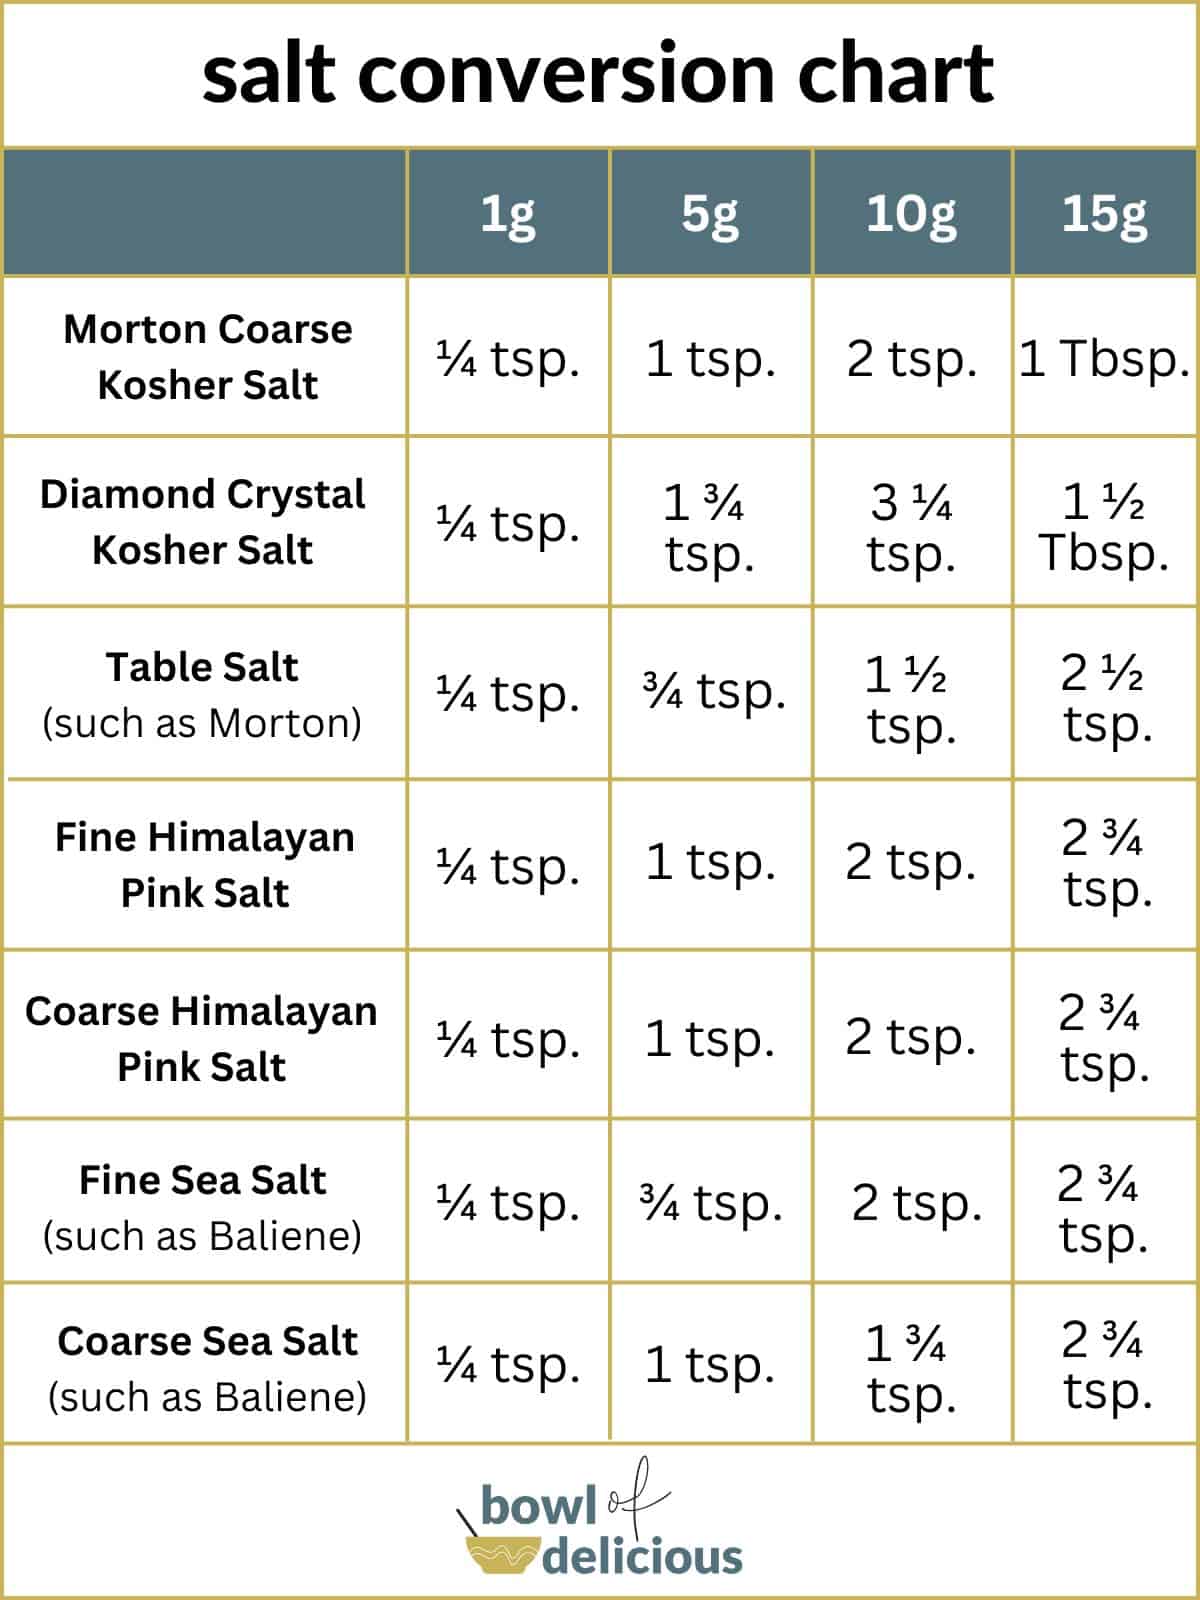 Salt conversion chart illustration